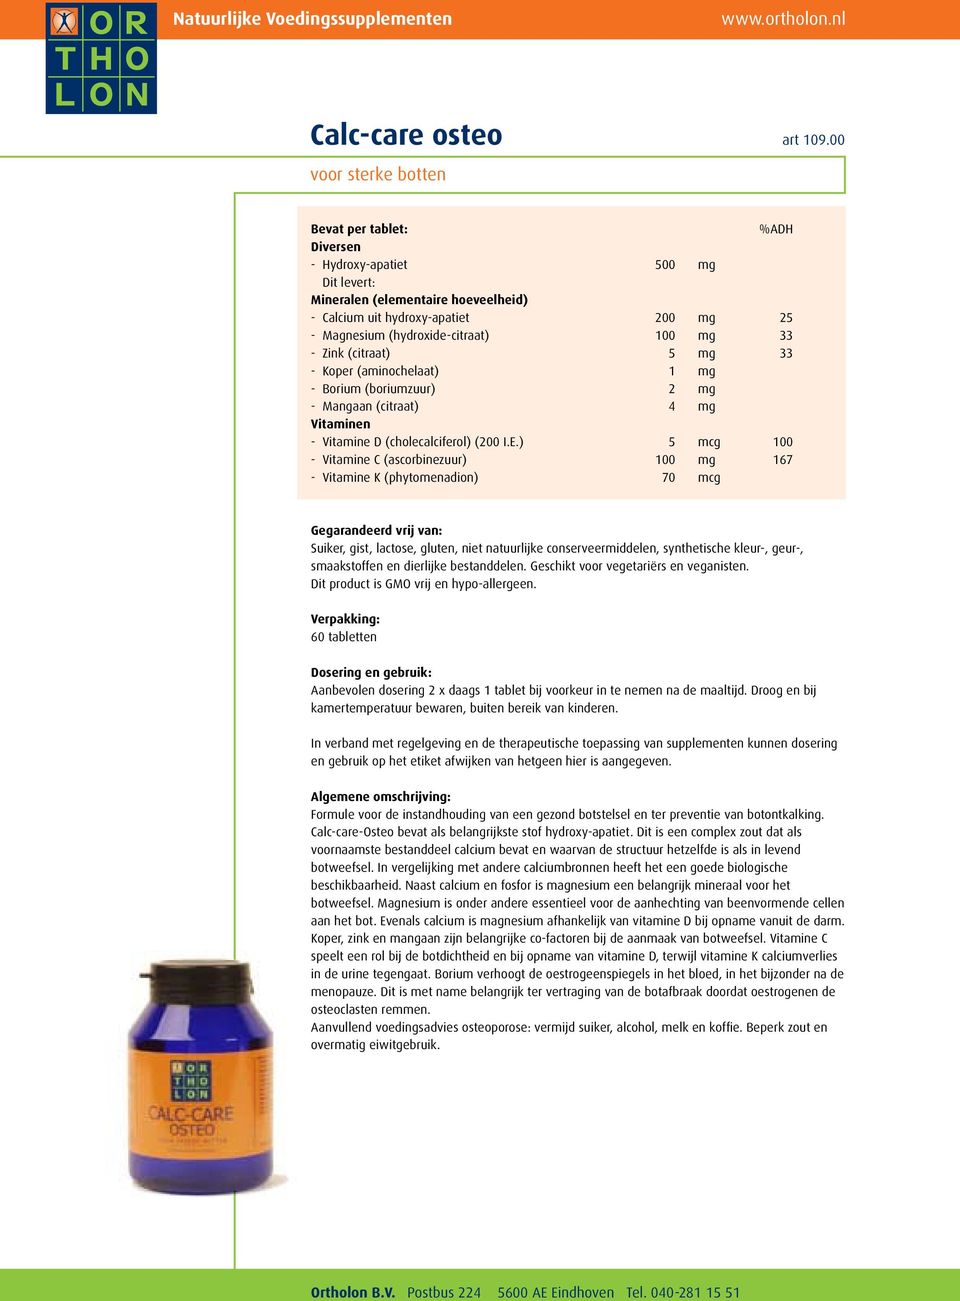 100 mg 33 - Zink (citraat) 5 mg 33 - Koper (aminochelaat) 1 mg - Borium (boriumzuur) 2 mg - Mangaan (citraat) 4 mg Vitaminen - Vitamine D (cholecalciferol) (200 I.E.